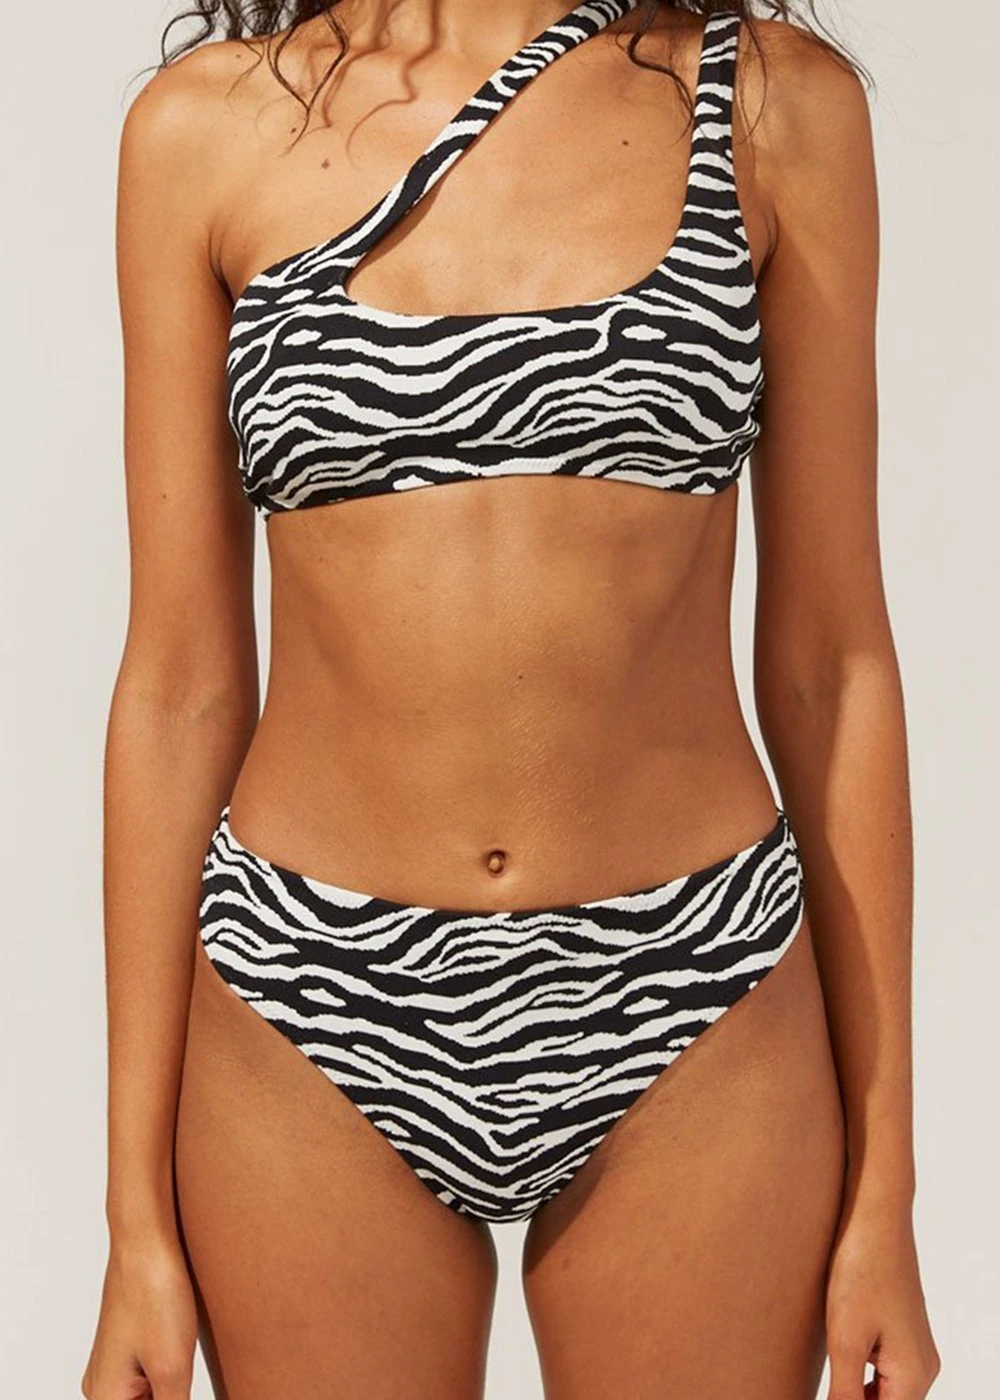 Zebra-Print Bikinis Are Summer’s Hottest Swimwear Trend